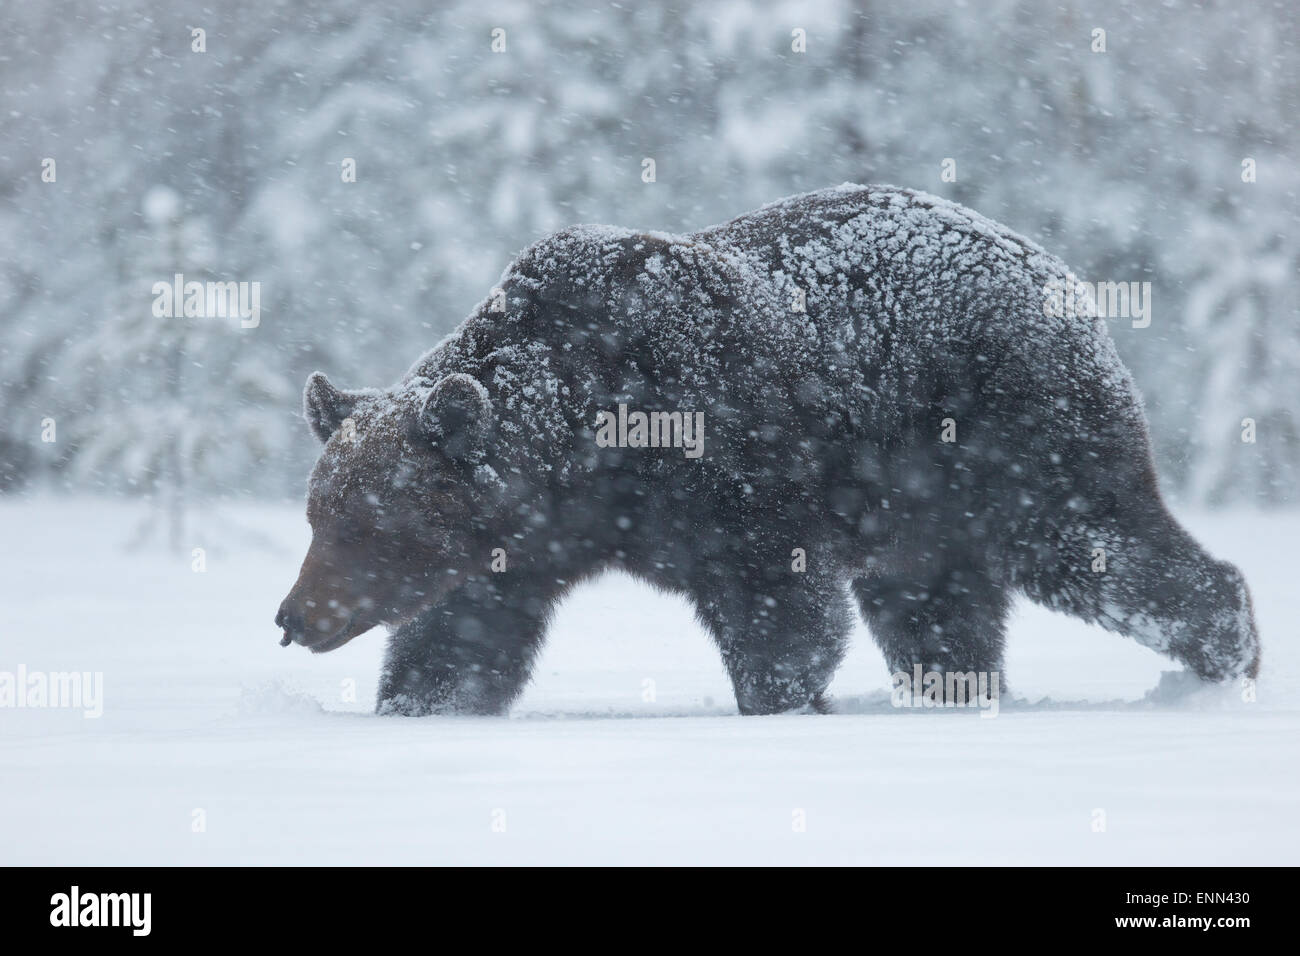 European Brown Bear, Ursus arctos arctos, during spring months, Finland. Stock Photo